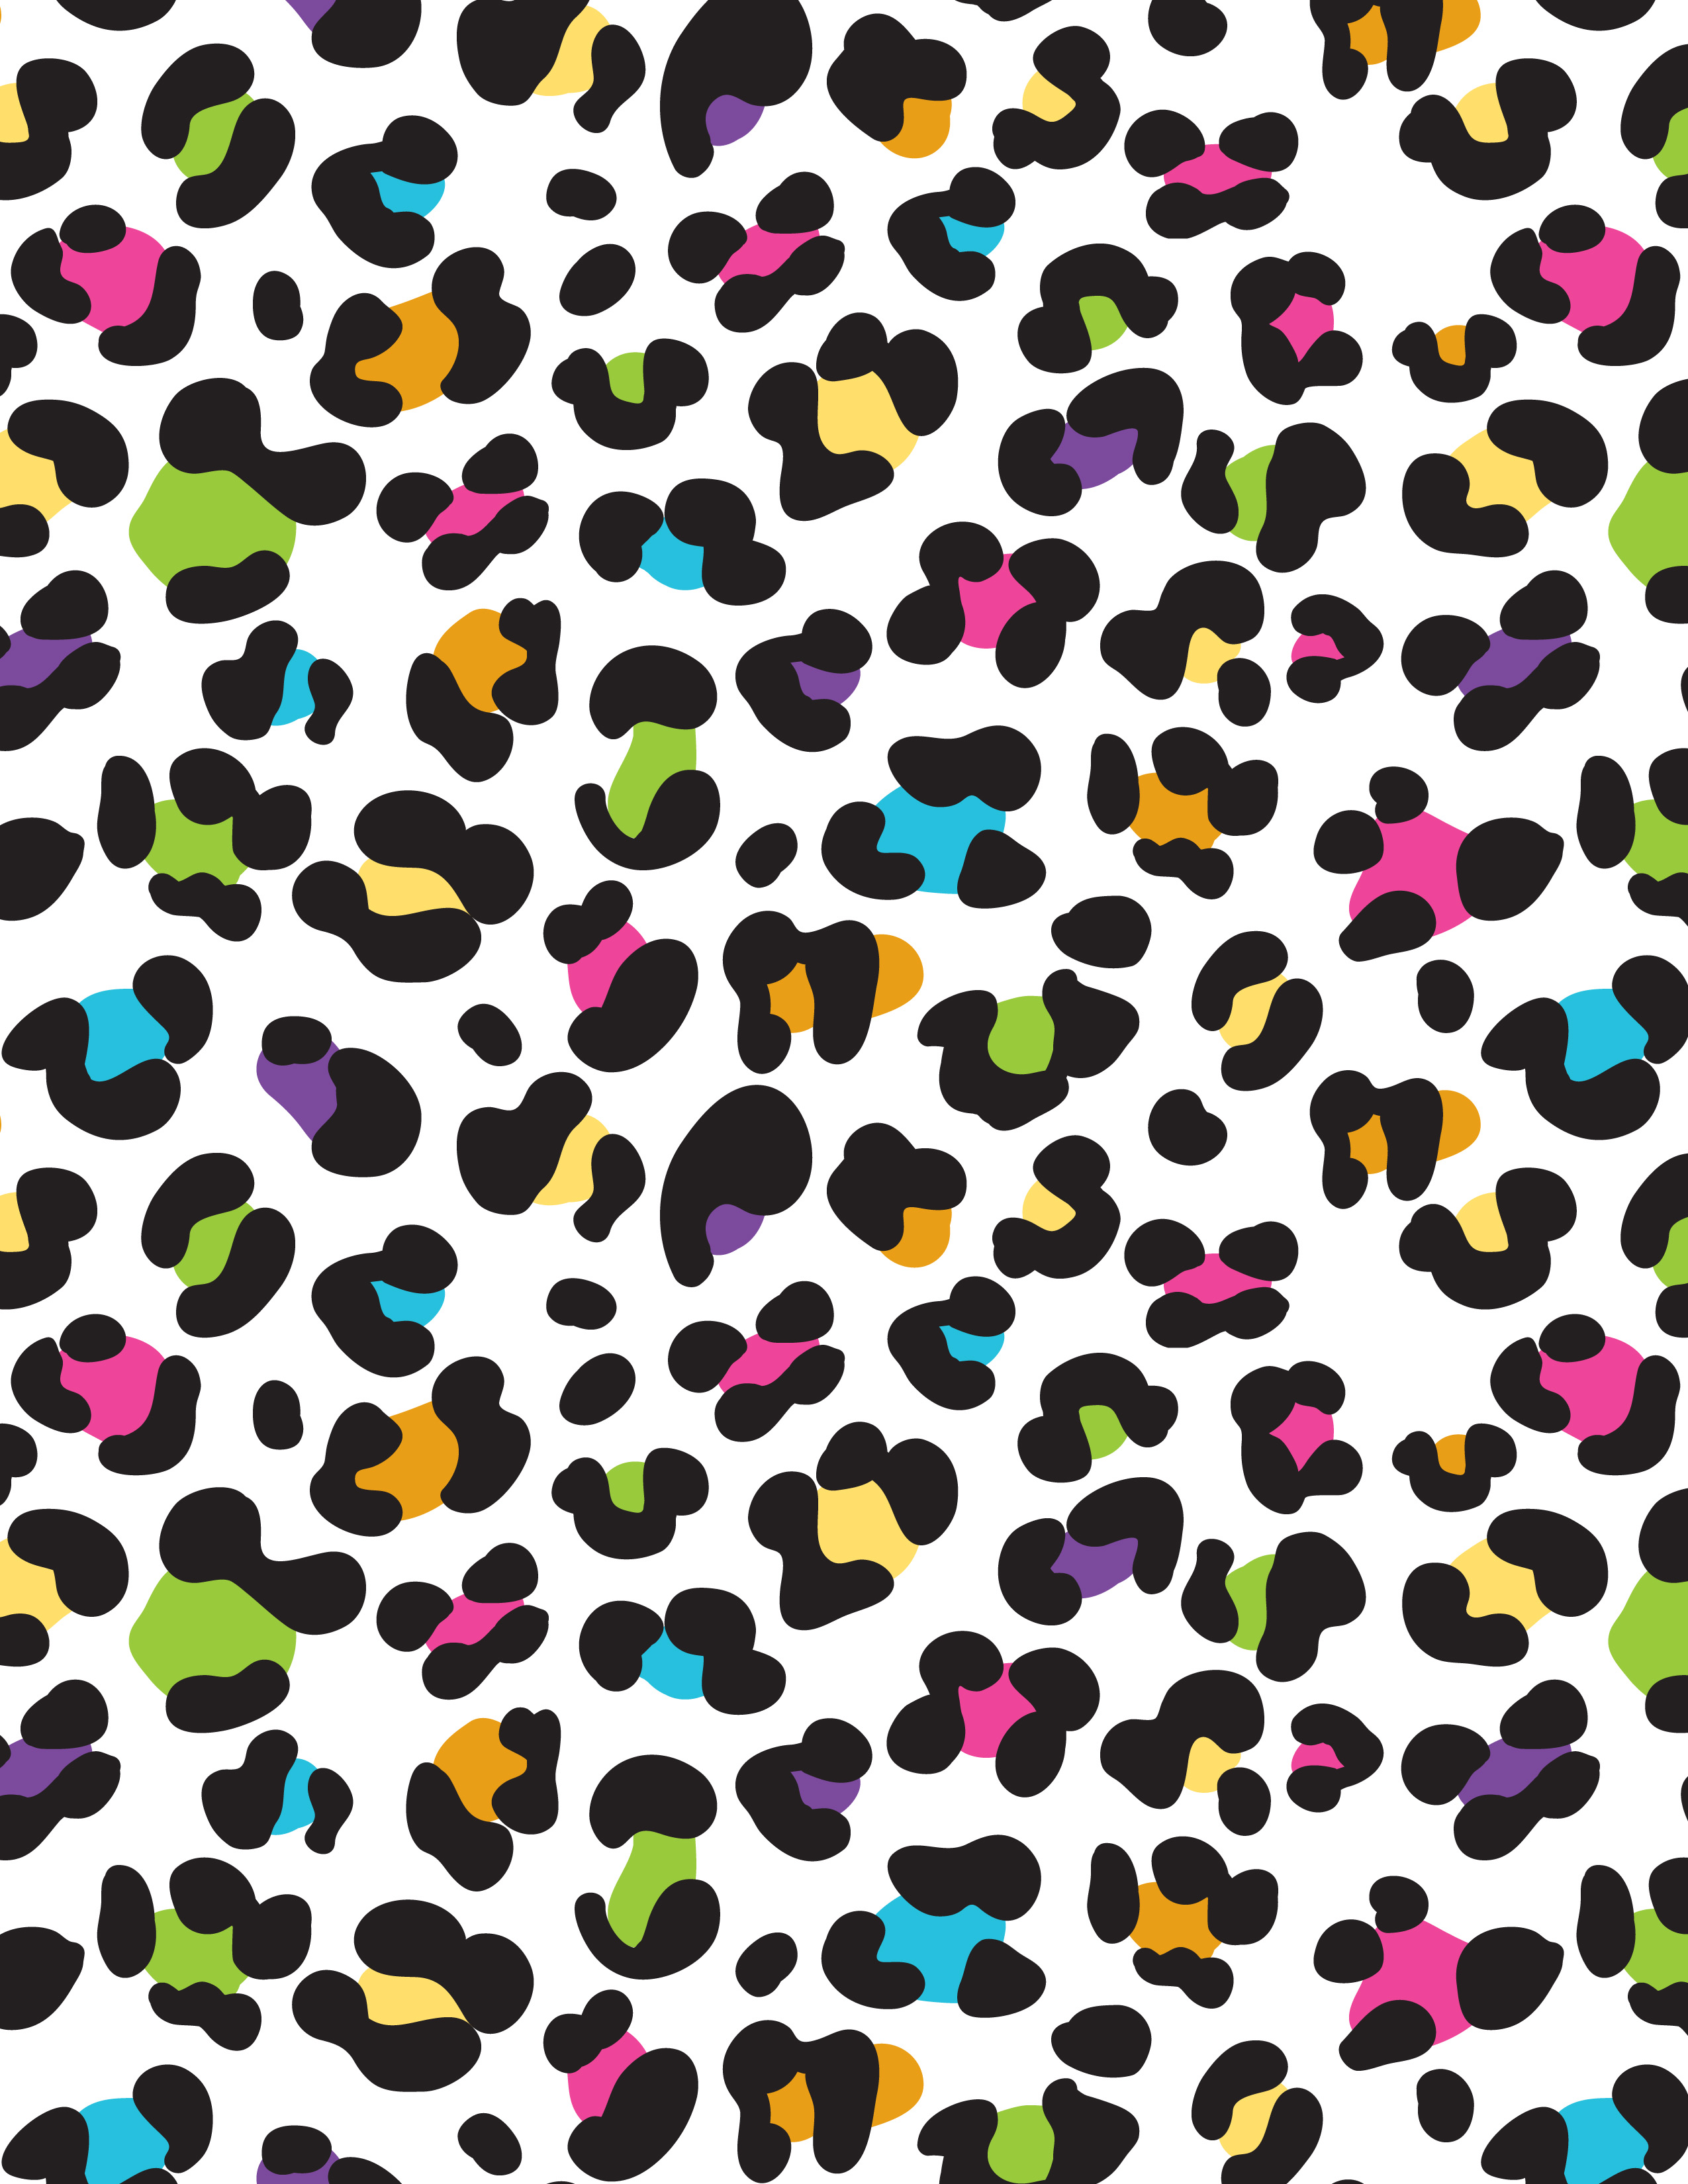 Free download colorful rainbow lisa frank leopard cheetah background [2550x3300] for your Desktop, Mobile & Tablet. Explore Lisa Frank Wallpaper. Free Lisa Frank Wallpaper